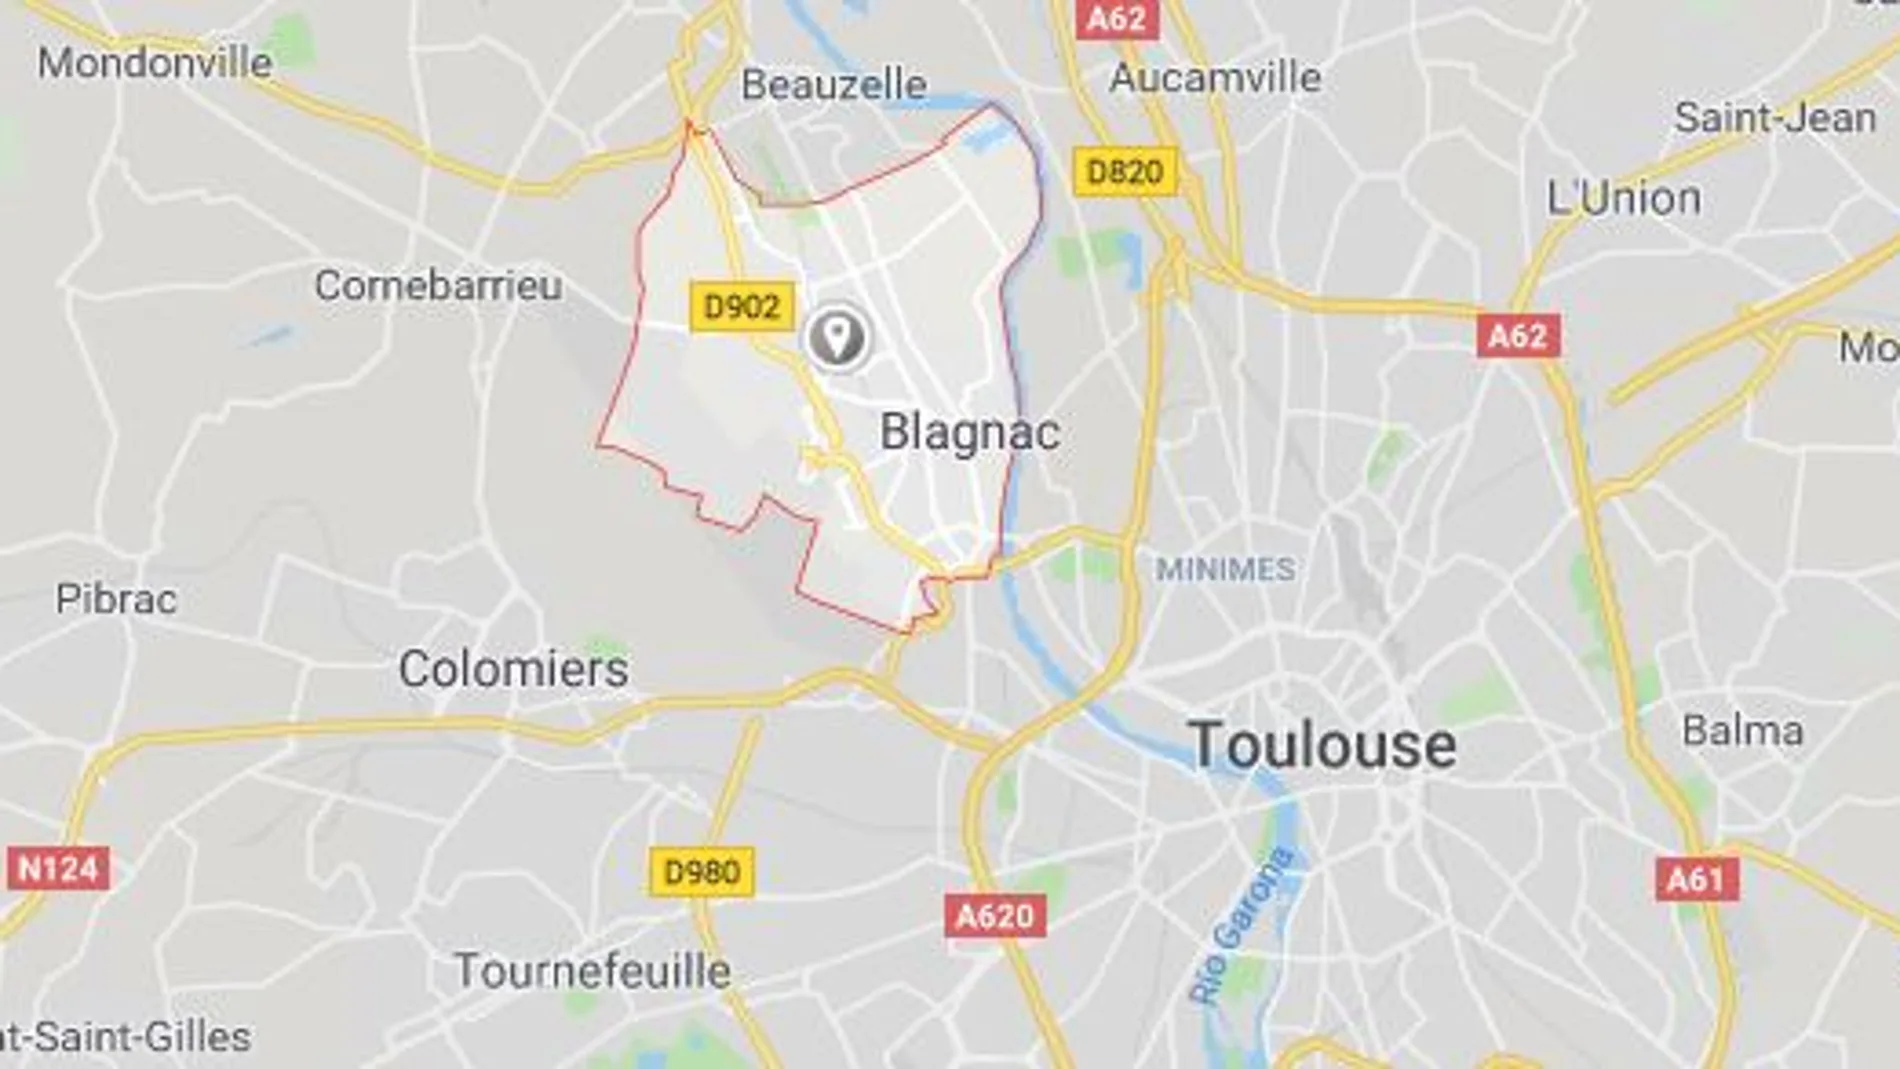 Blagnac se encuentra al oeste de Toulouse